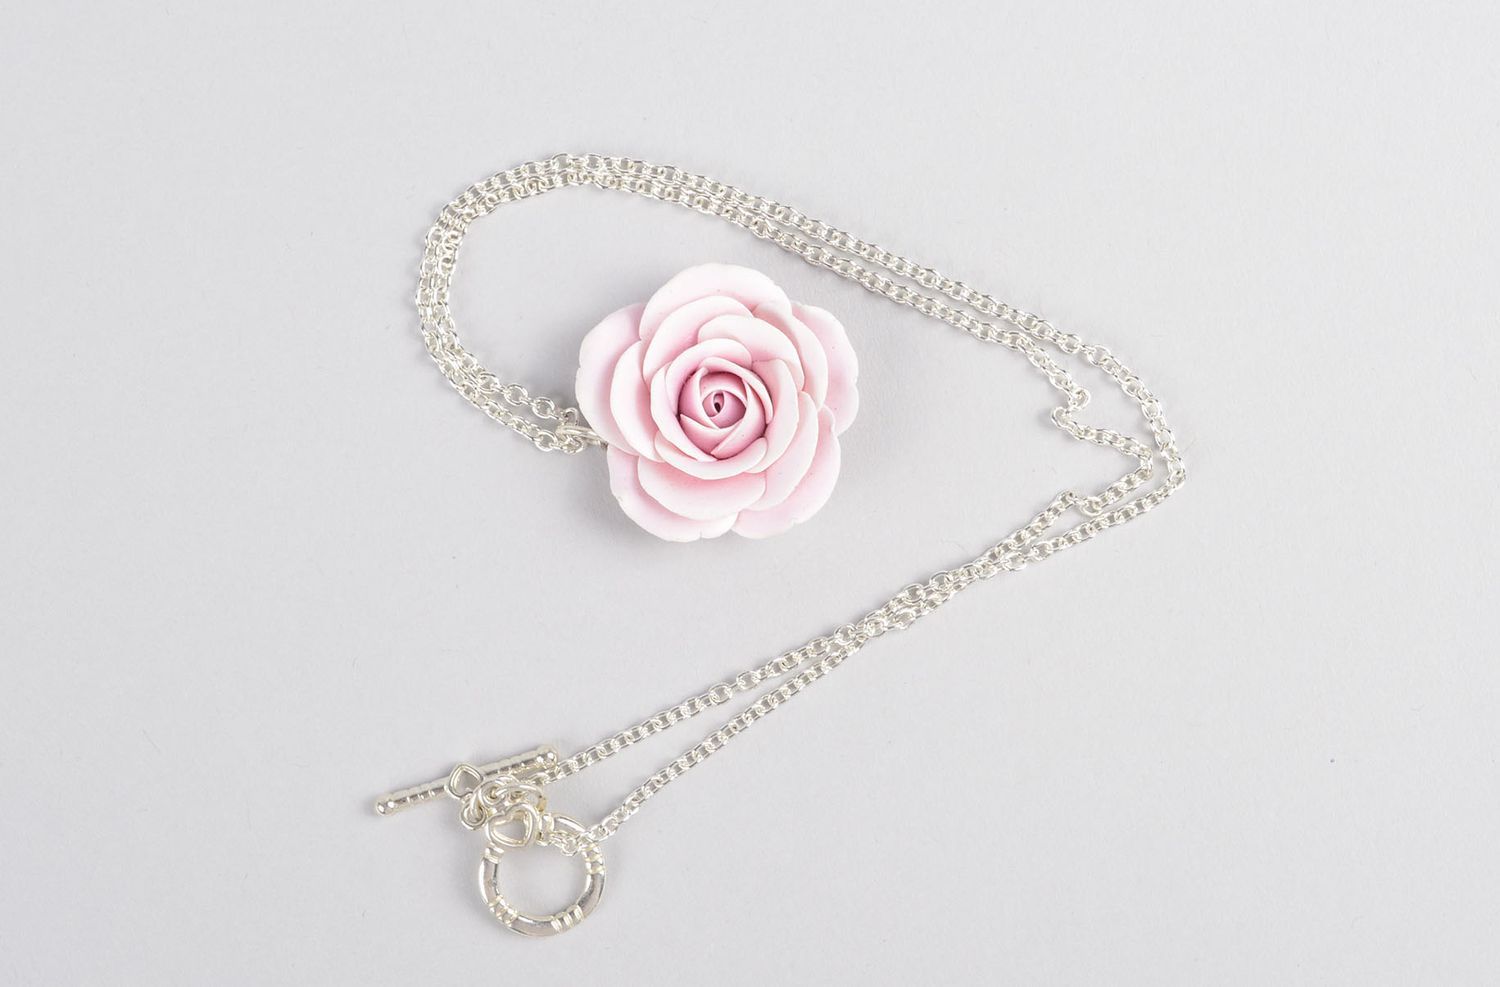 Handmade pendant for women unusual accessory gift ideas designer jewelry photo 2